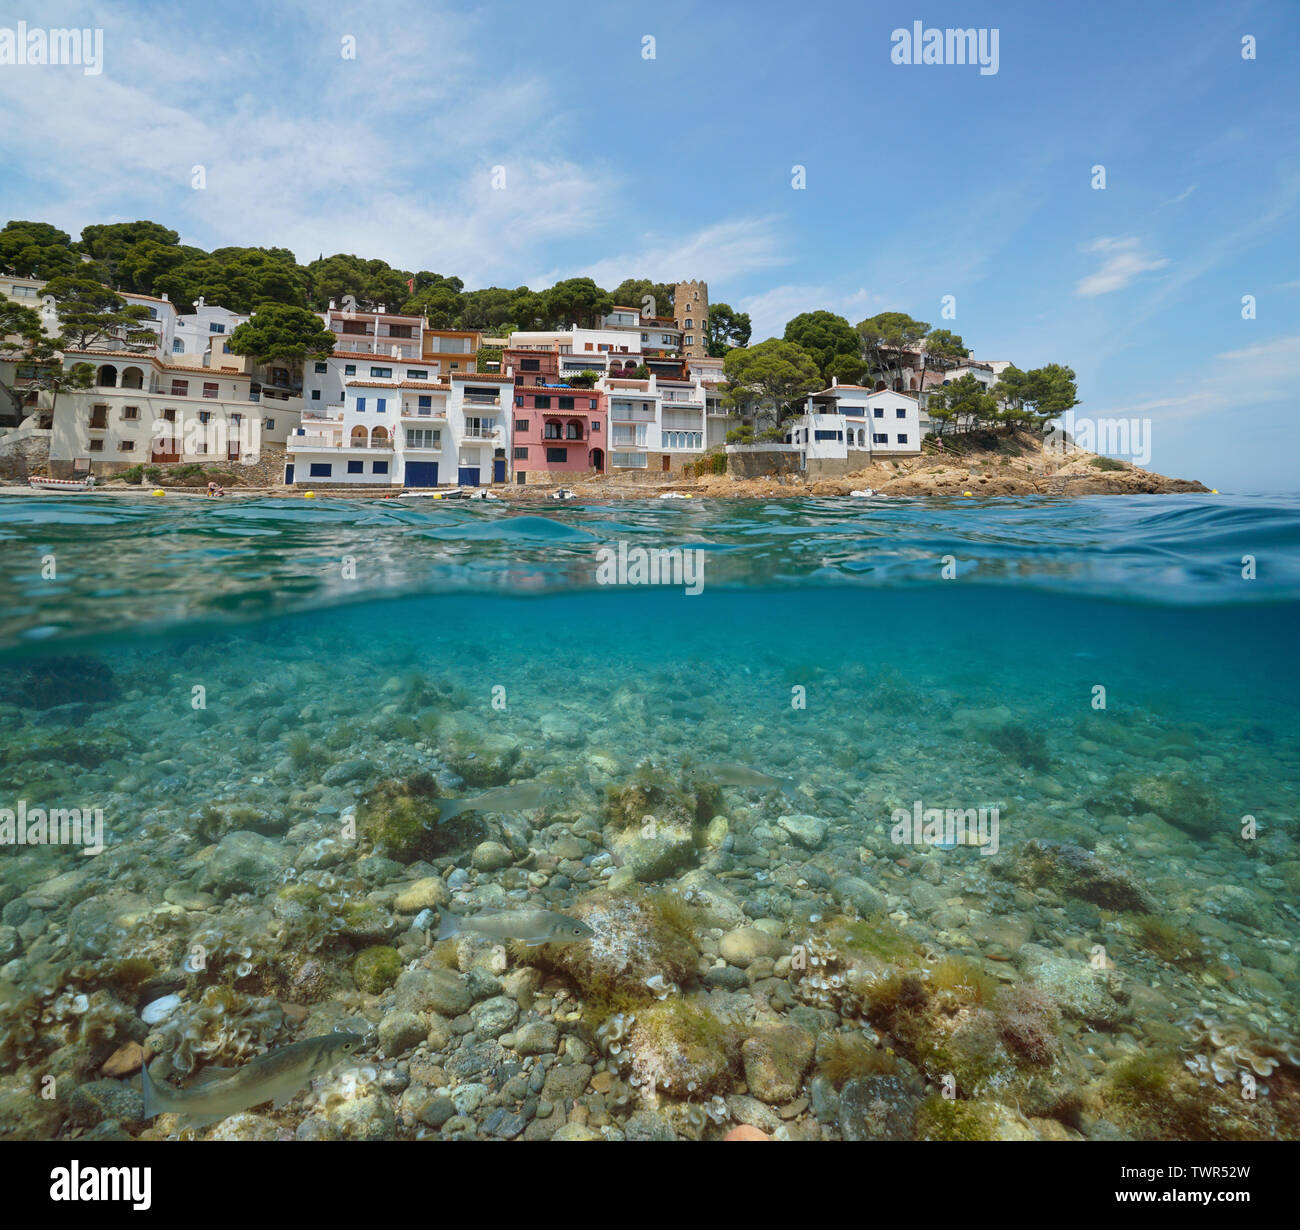 Coastline of Mediterranean village on Costa Brava in Spain with sea bass fish and rocks underwater, Sa Tuna, Begur, Catalonia, over and under water Stock Photo